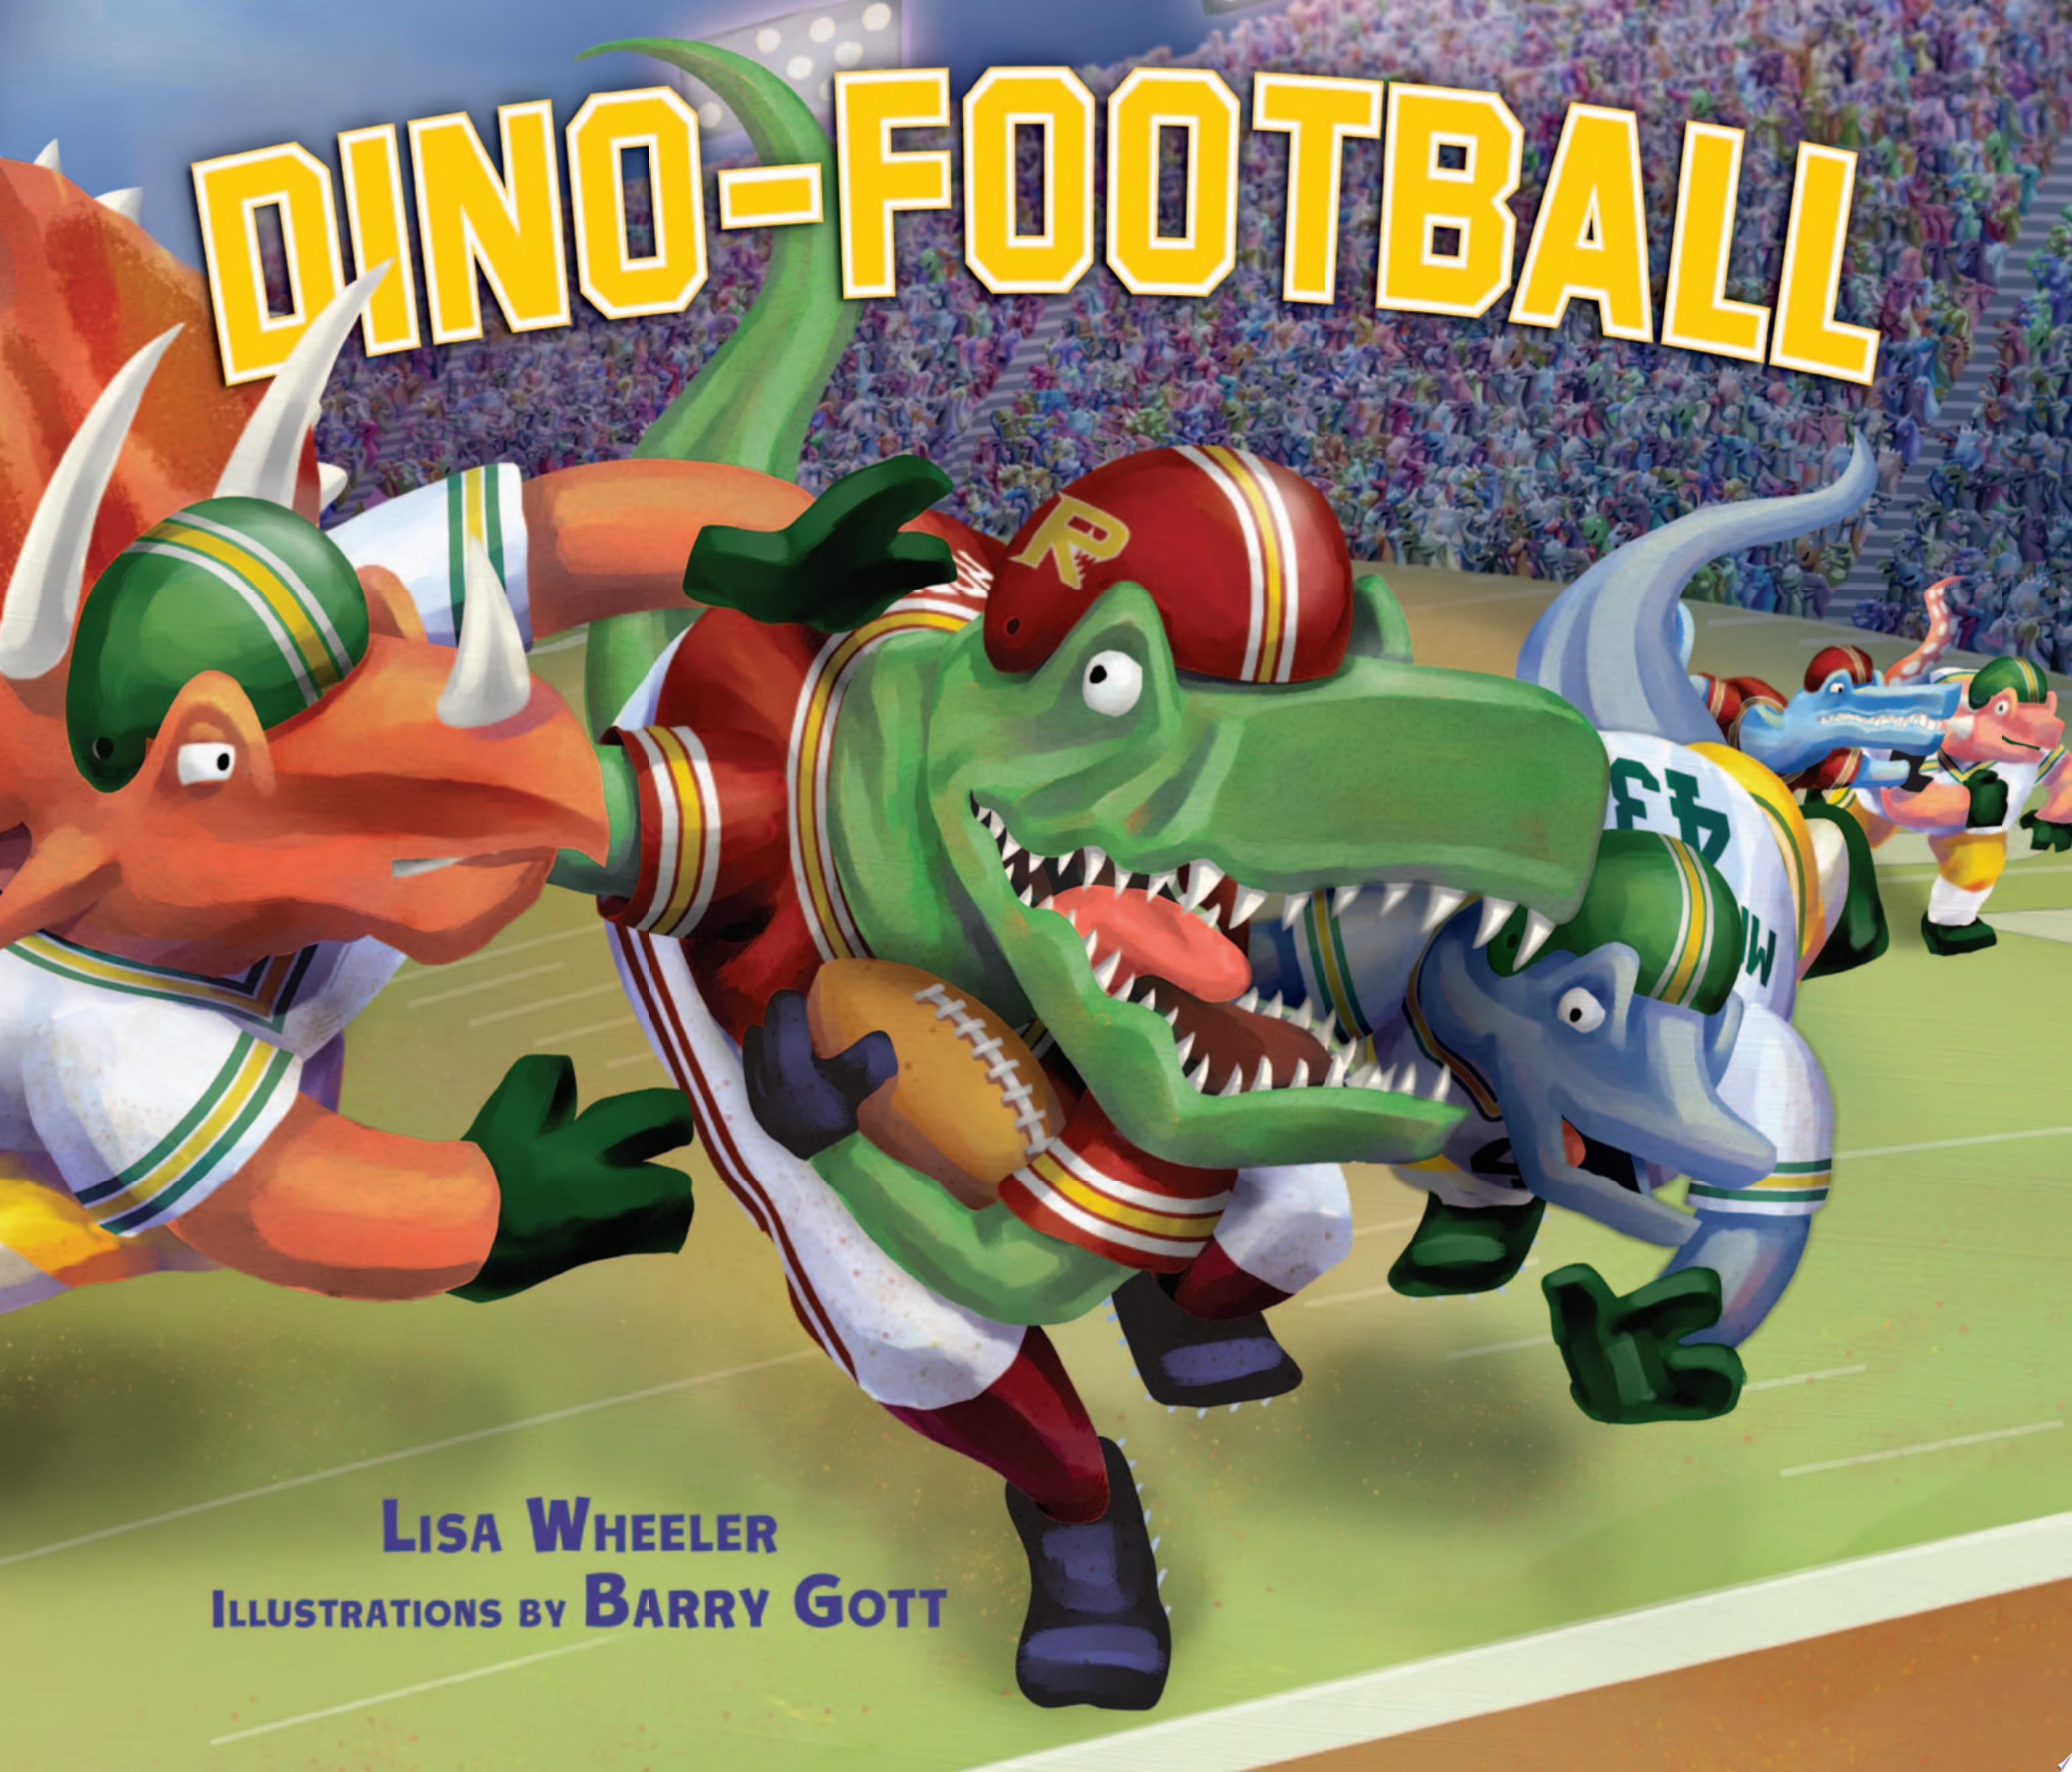 Image for "Dino-football"